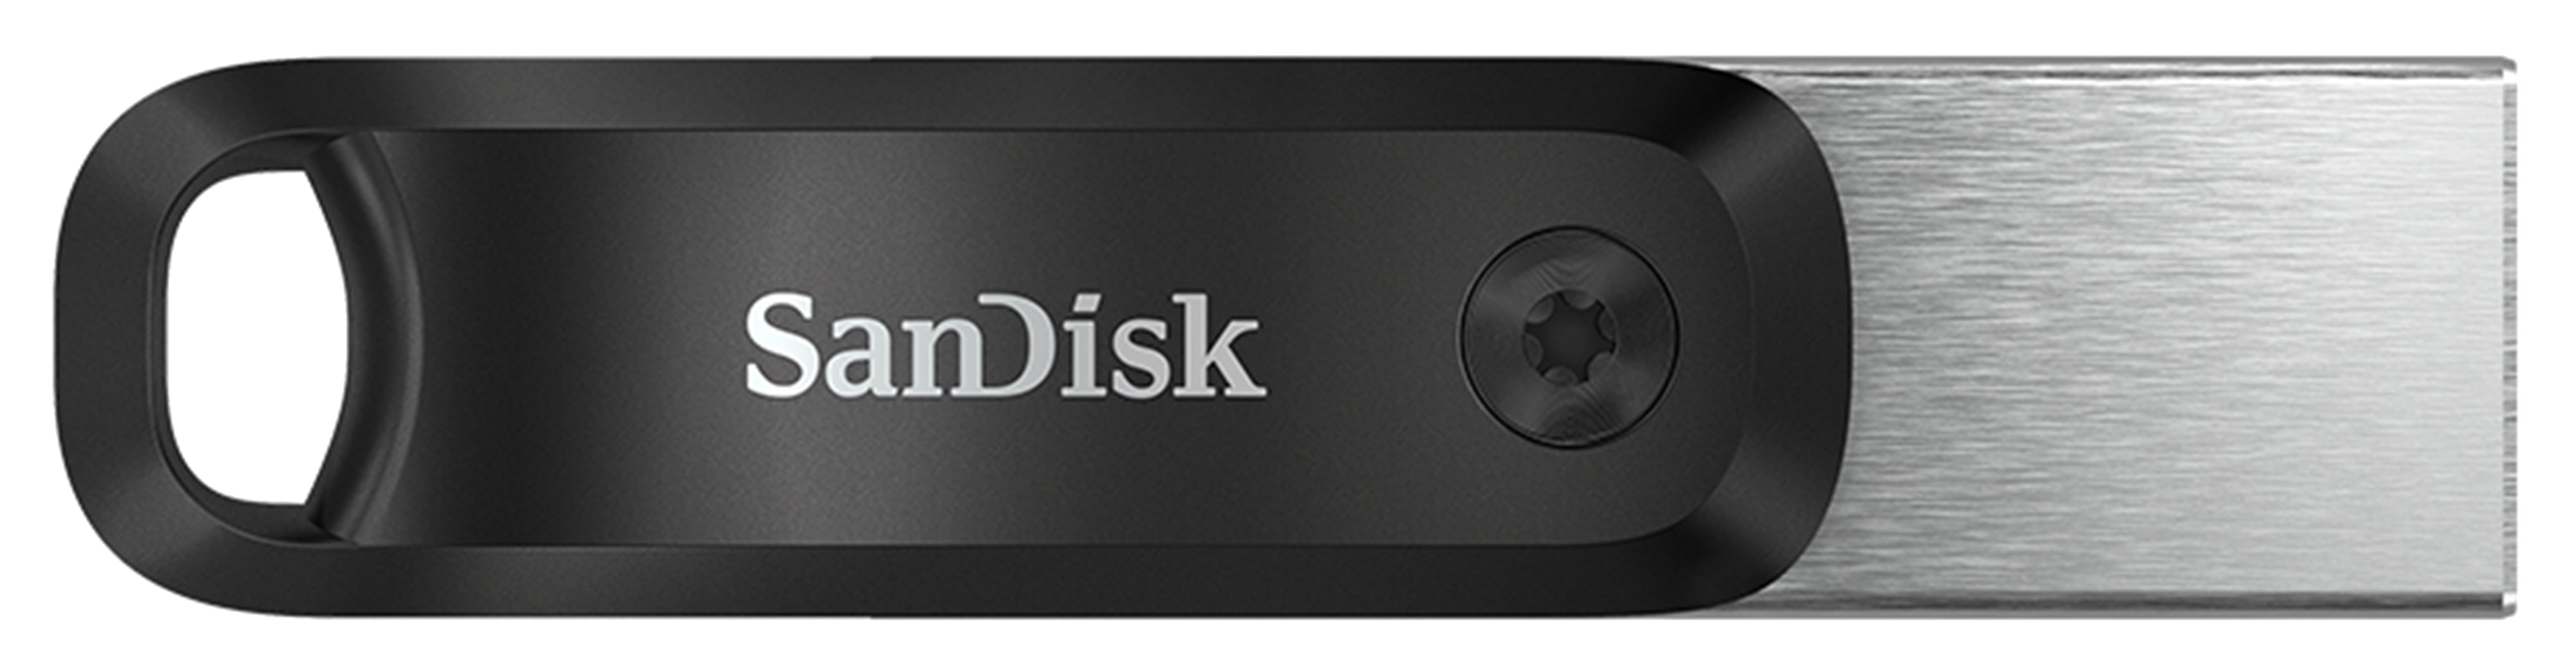 SANDISK USB 3.0 Stick iXpand Go 128GB